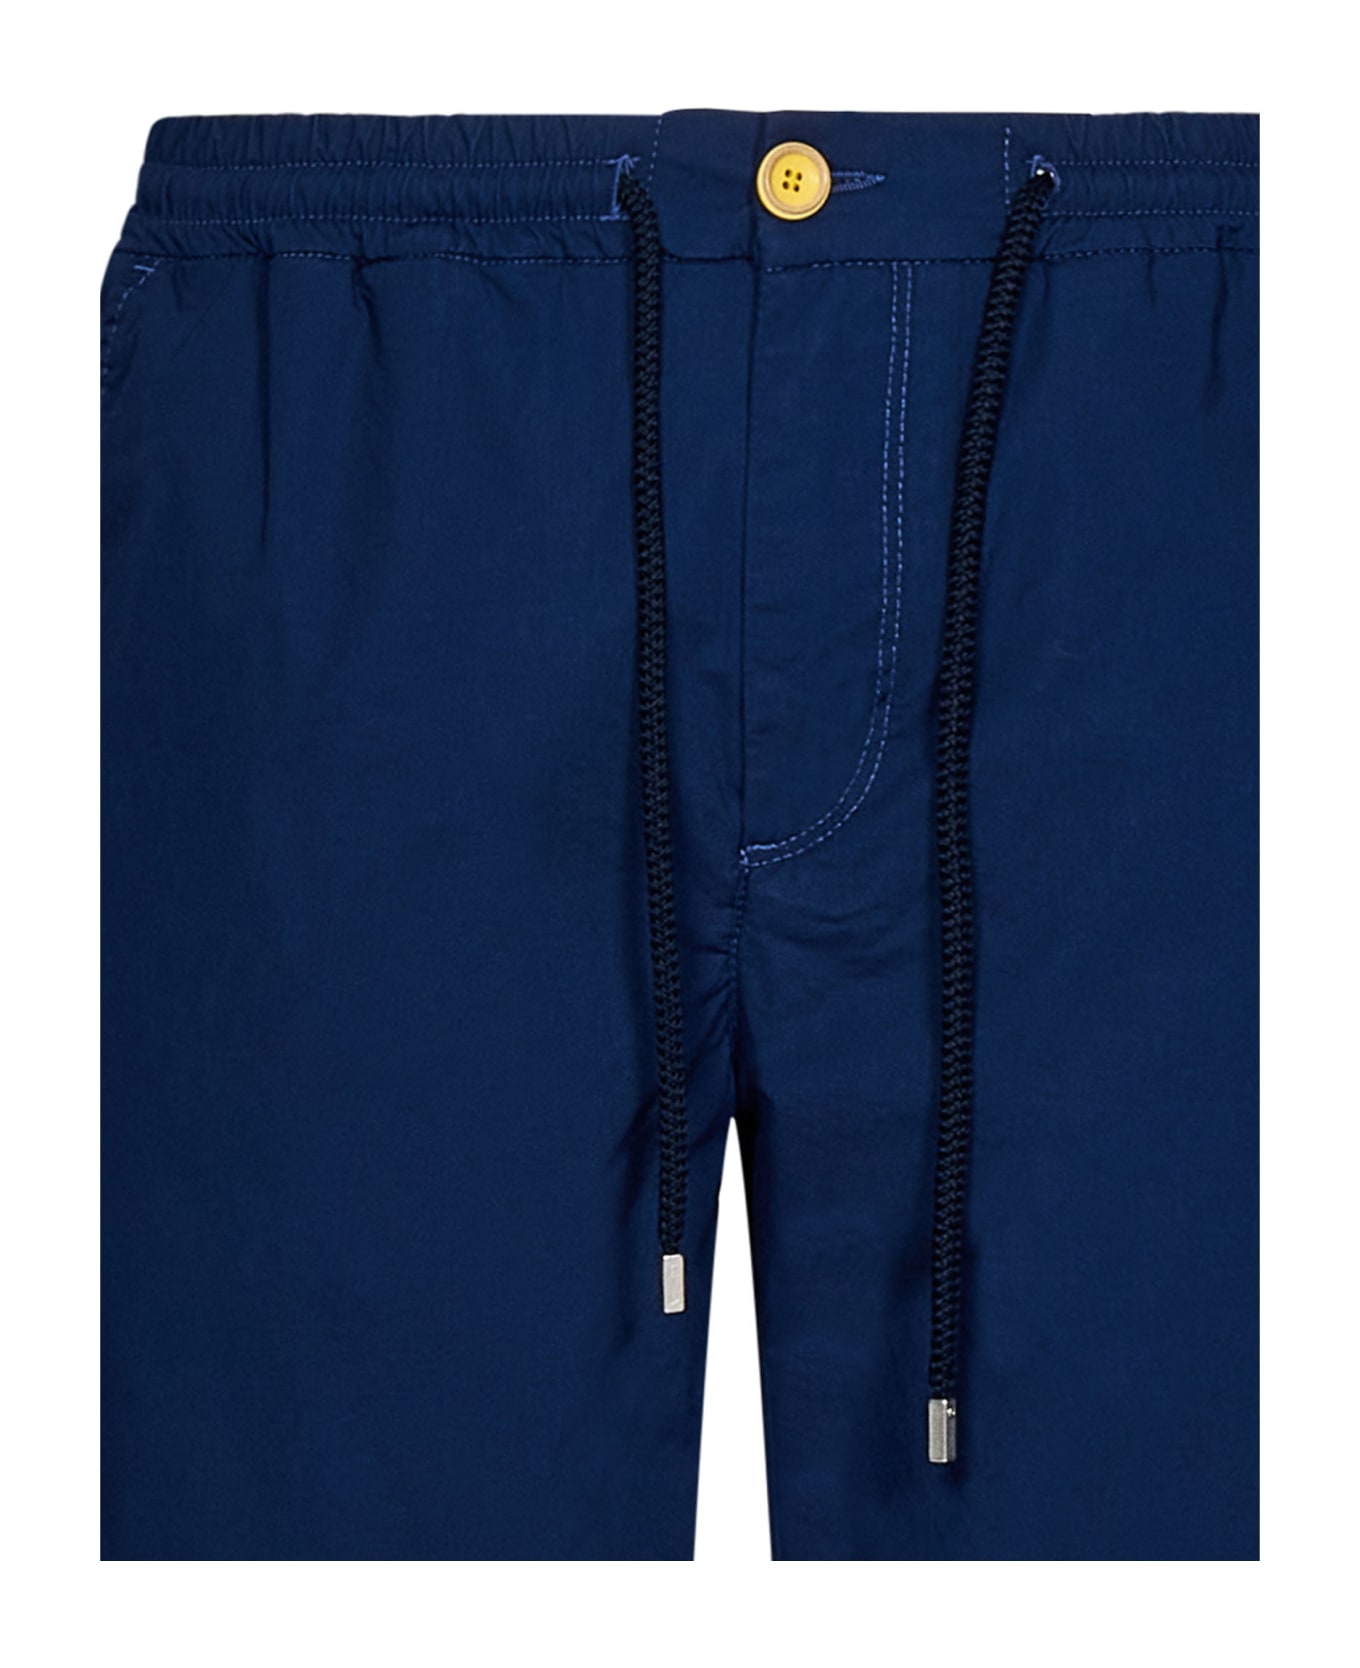 Vilebrequin Shorts - Blue